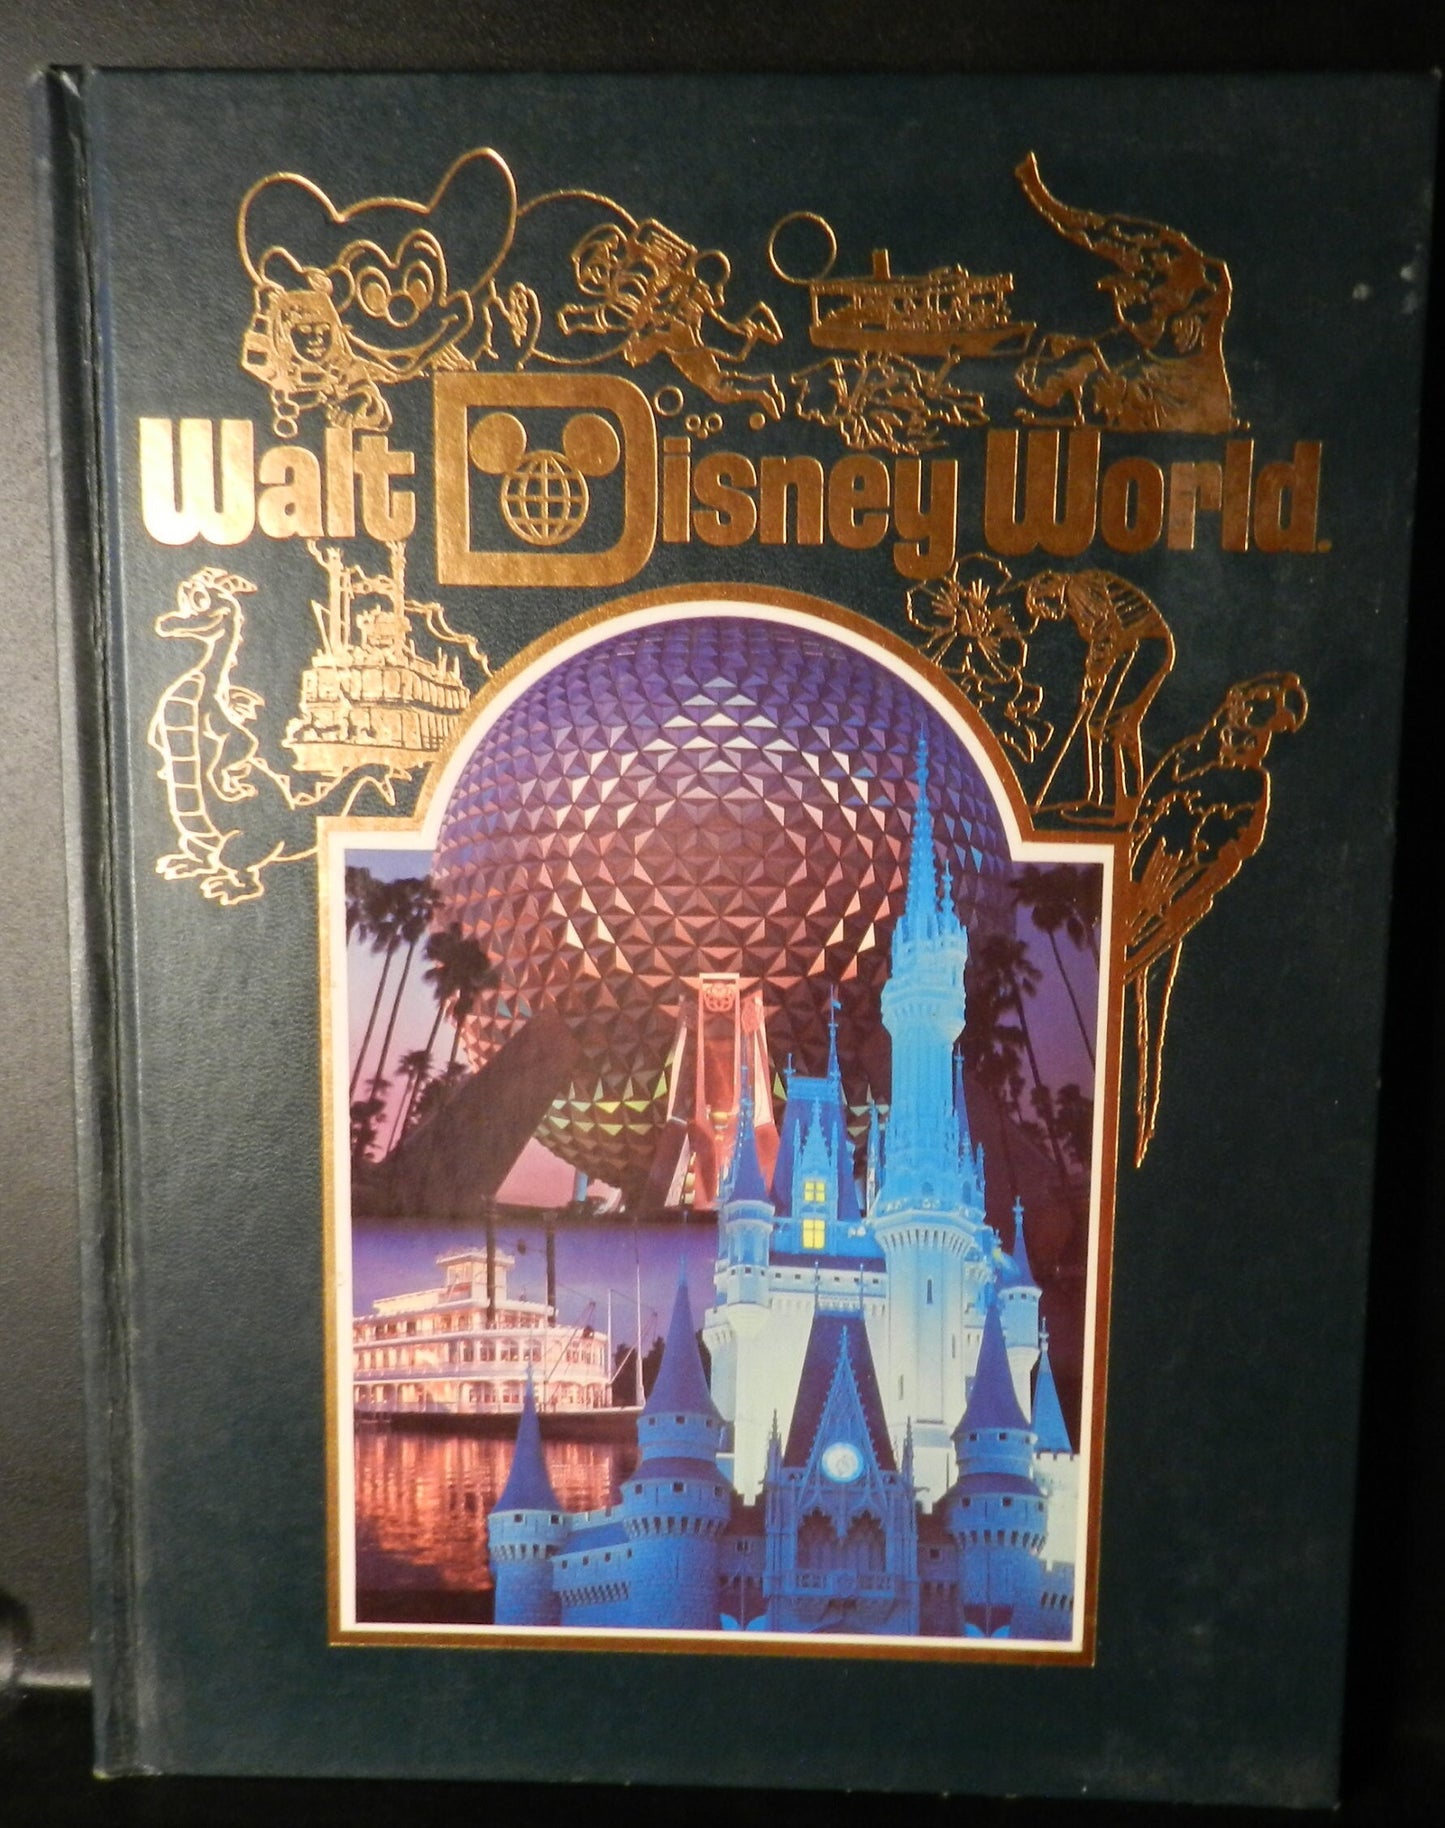 Vintage Commemorative Book "Walt Disney World" 1986